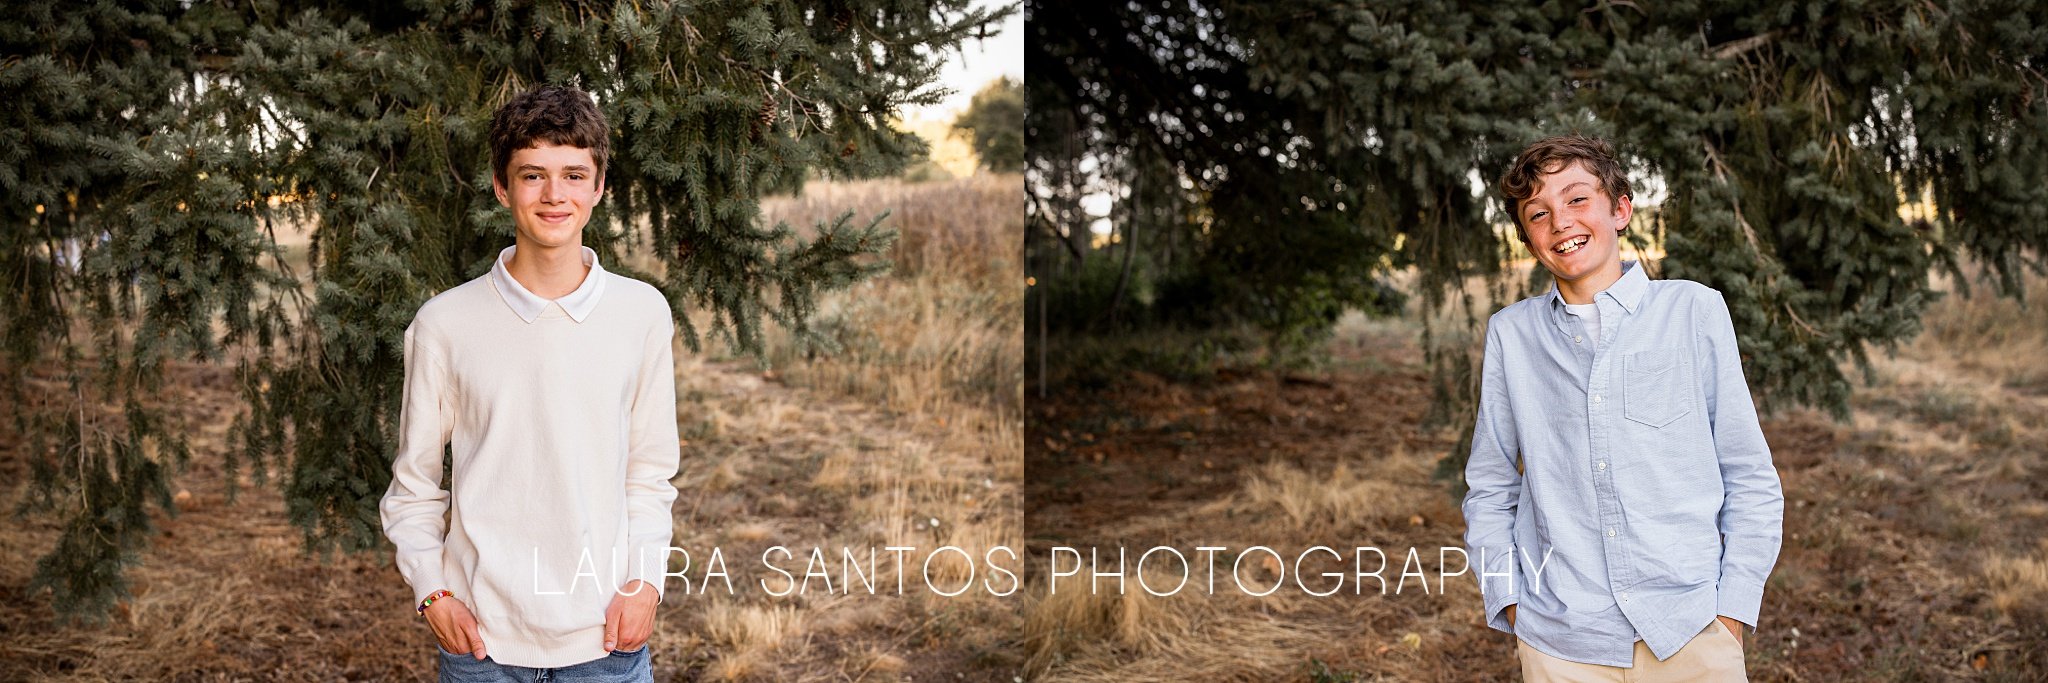 Laura Santos Photography Portland Oregon Family Photographer_4397.jpg